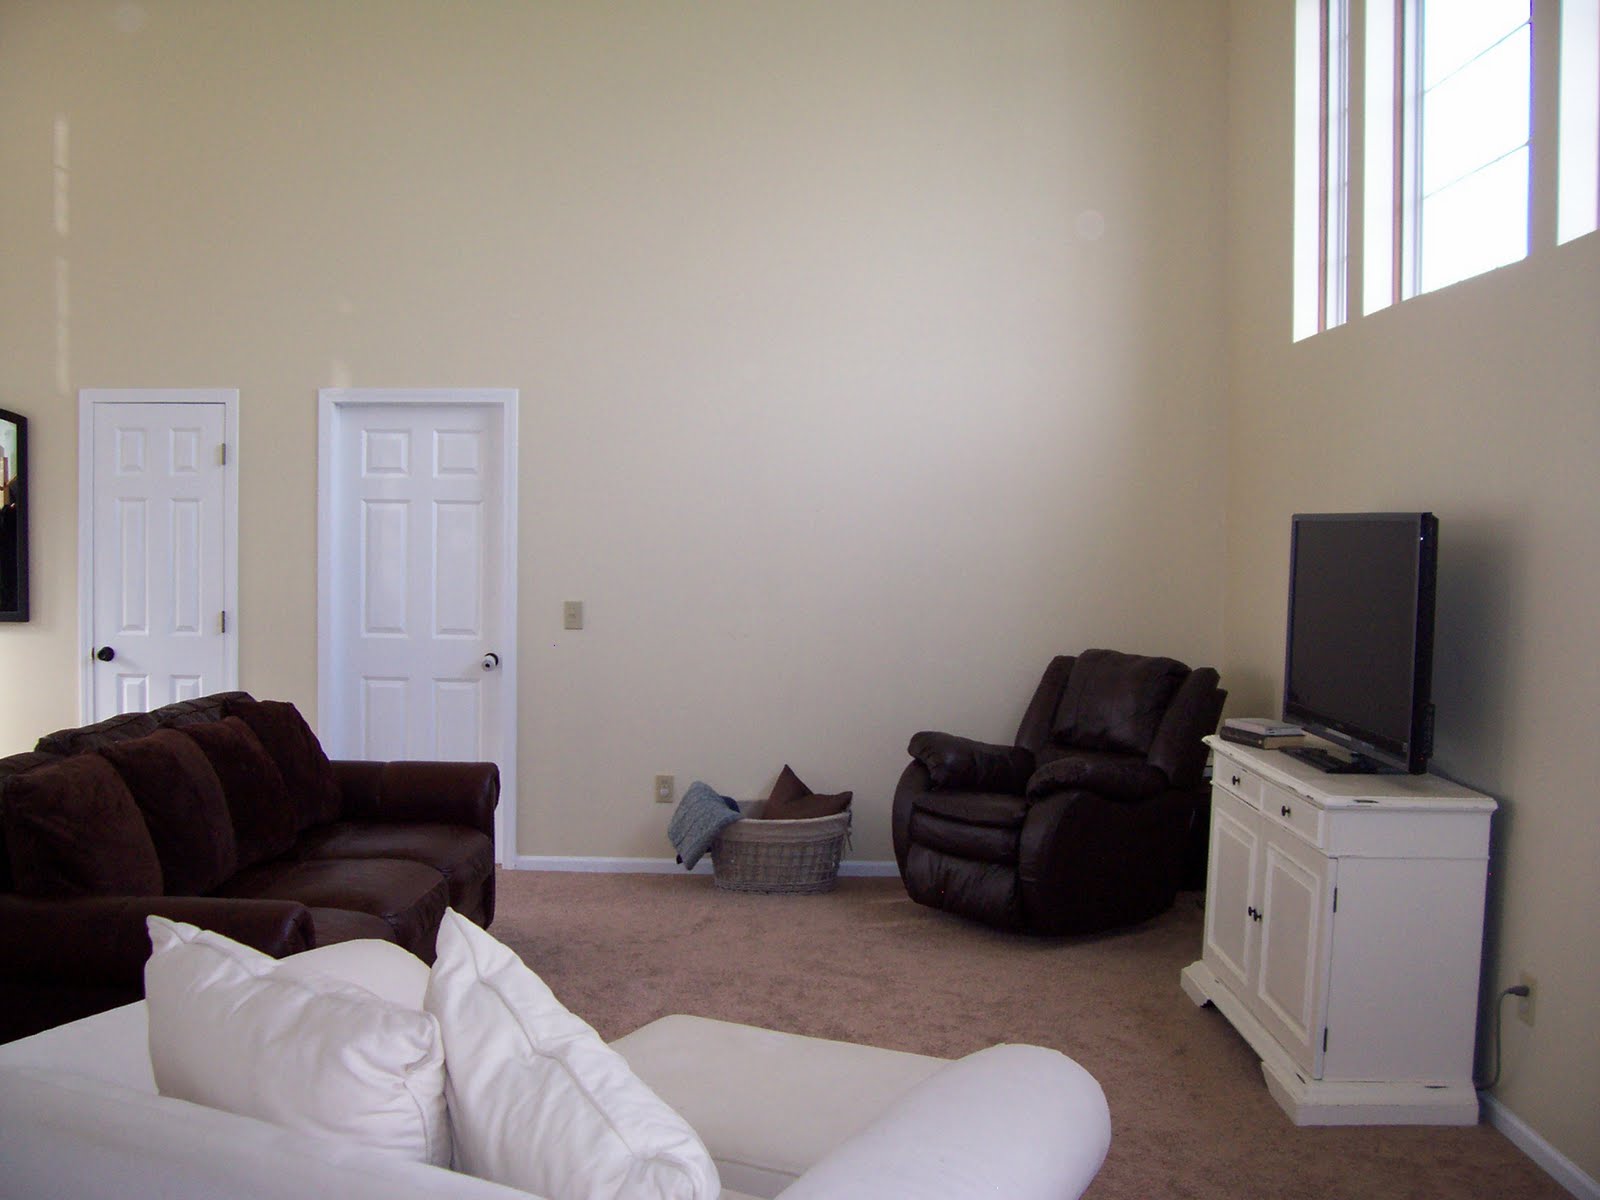 New Living Room: April 2011